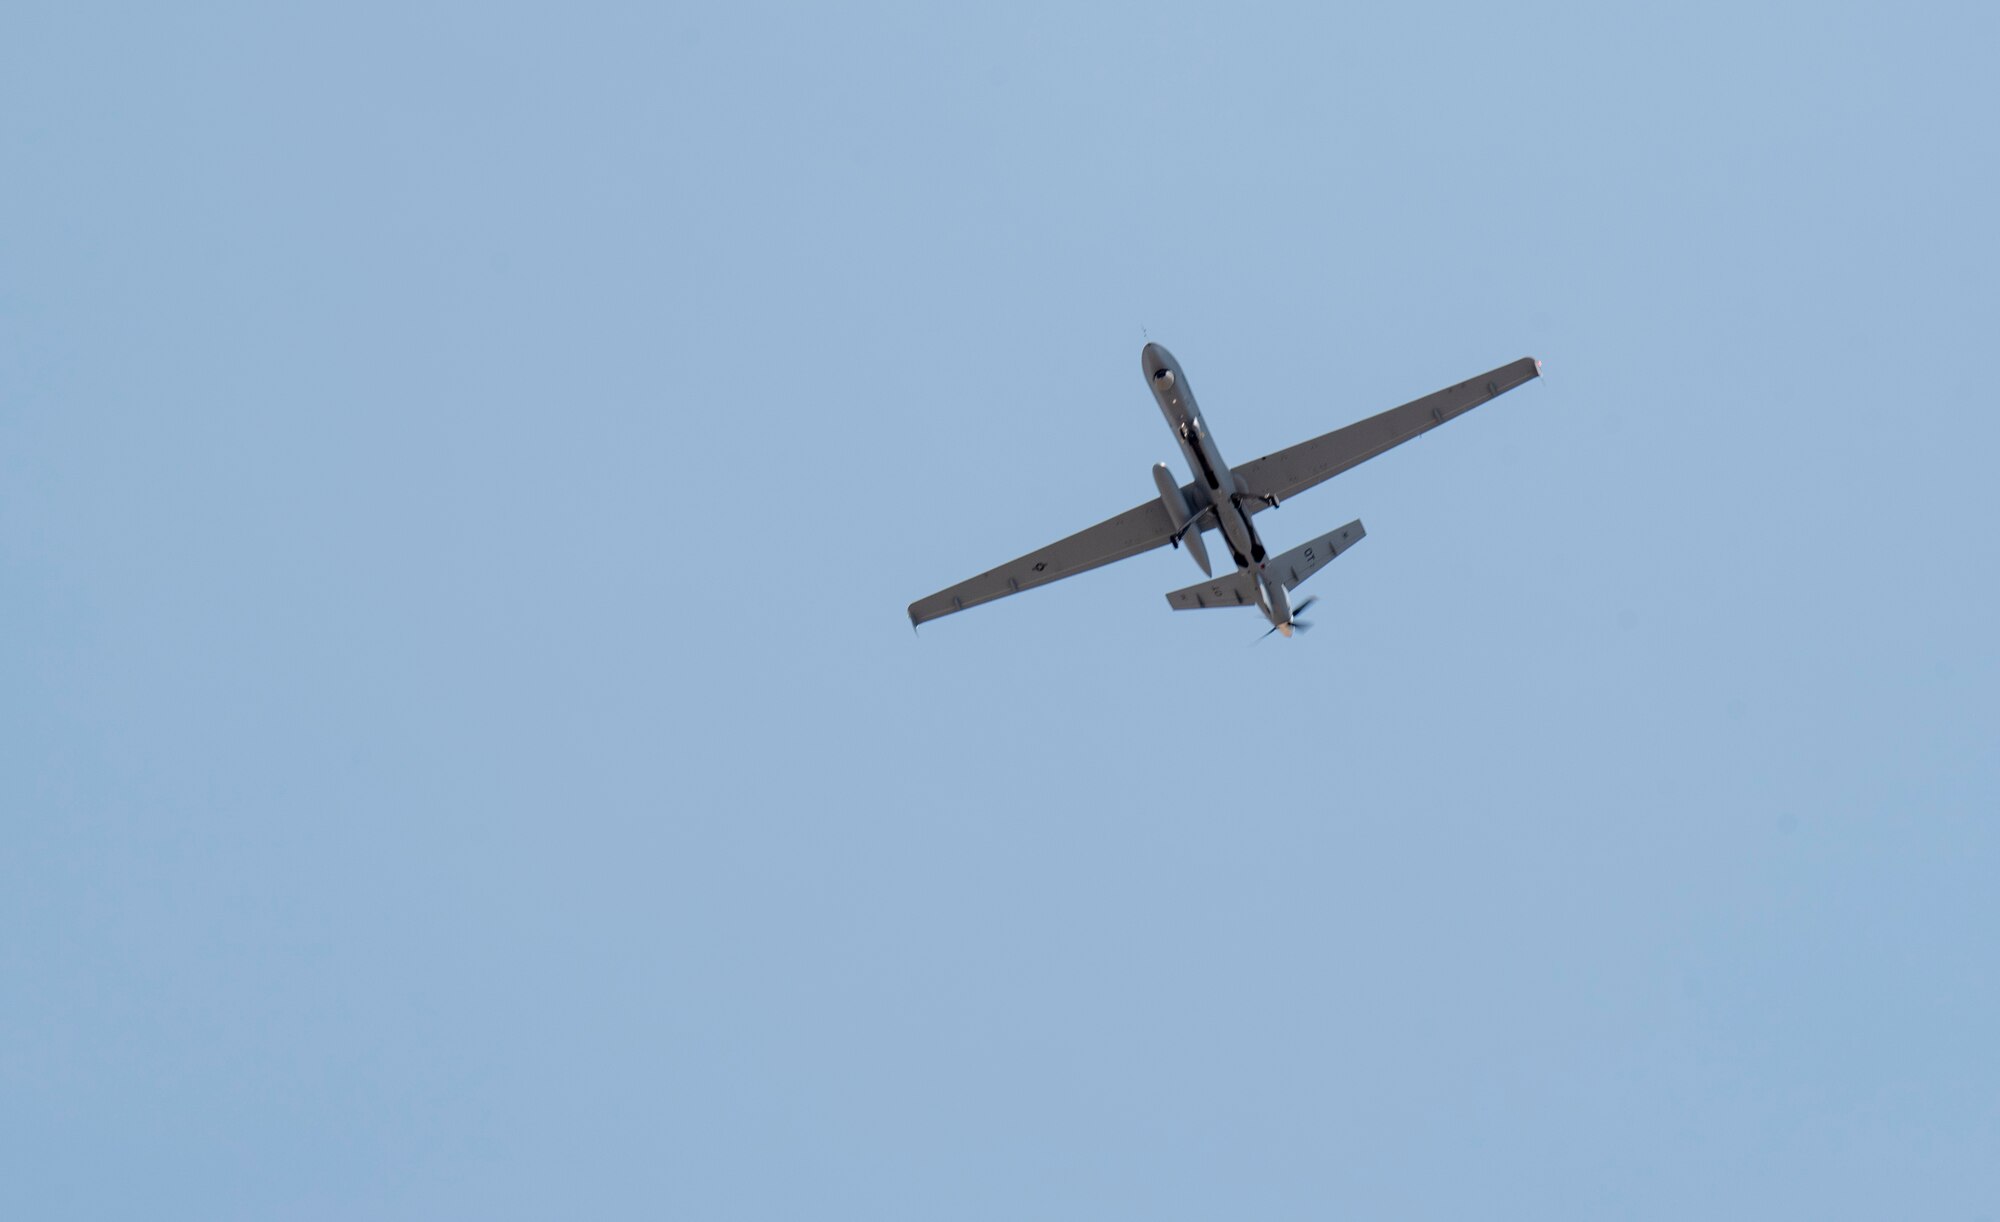 An MQ-9 Reaper flies through a clear blue sky over Holloman AFB, New Mexico.